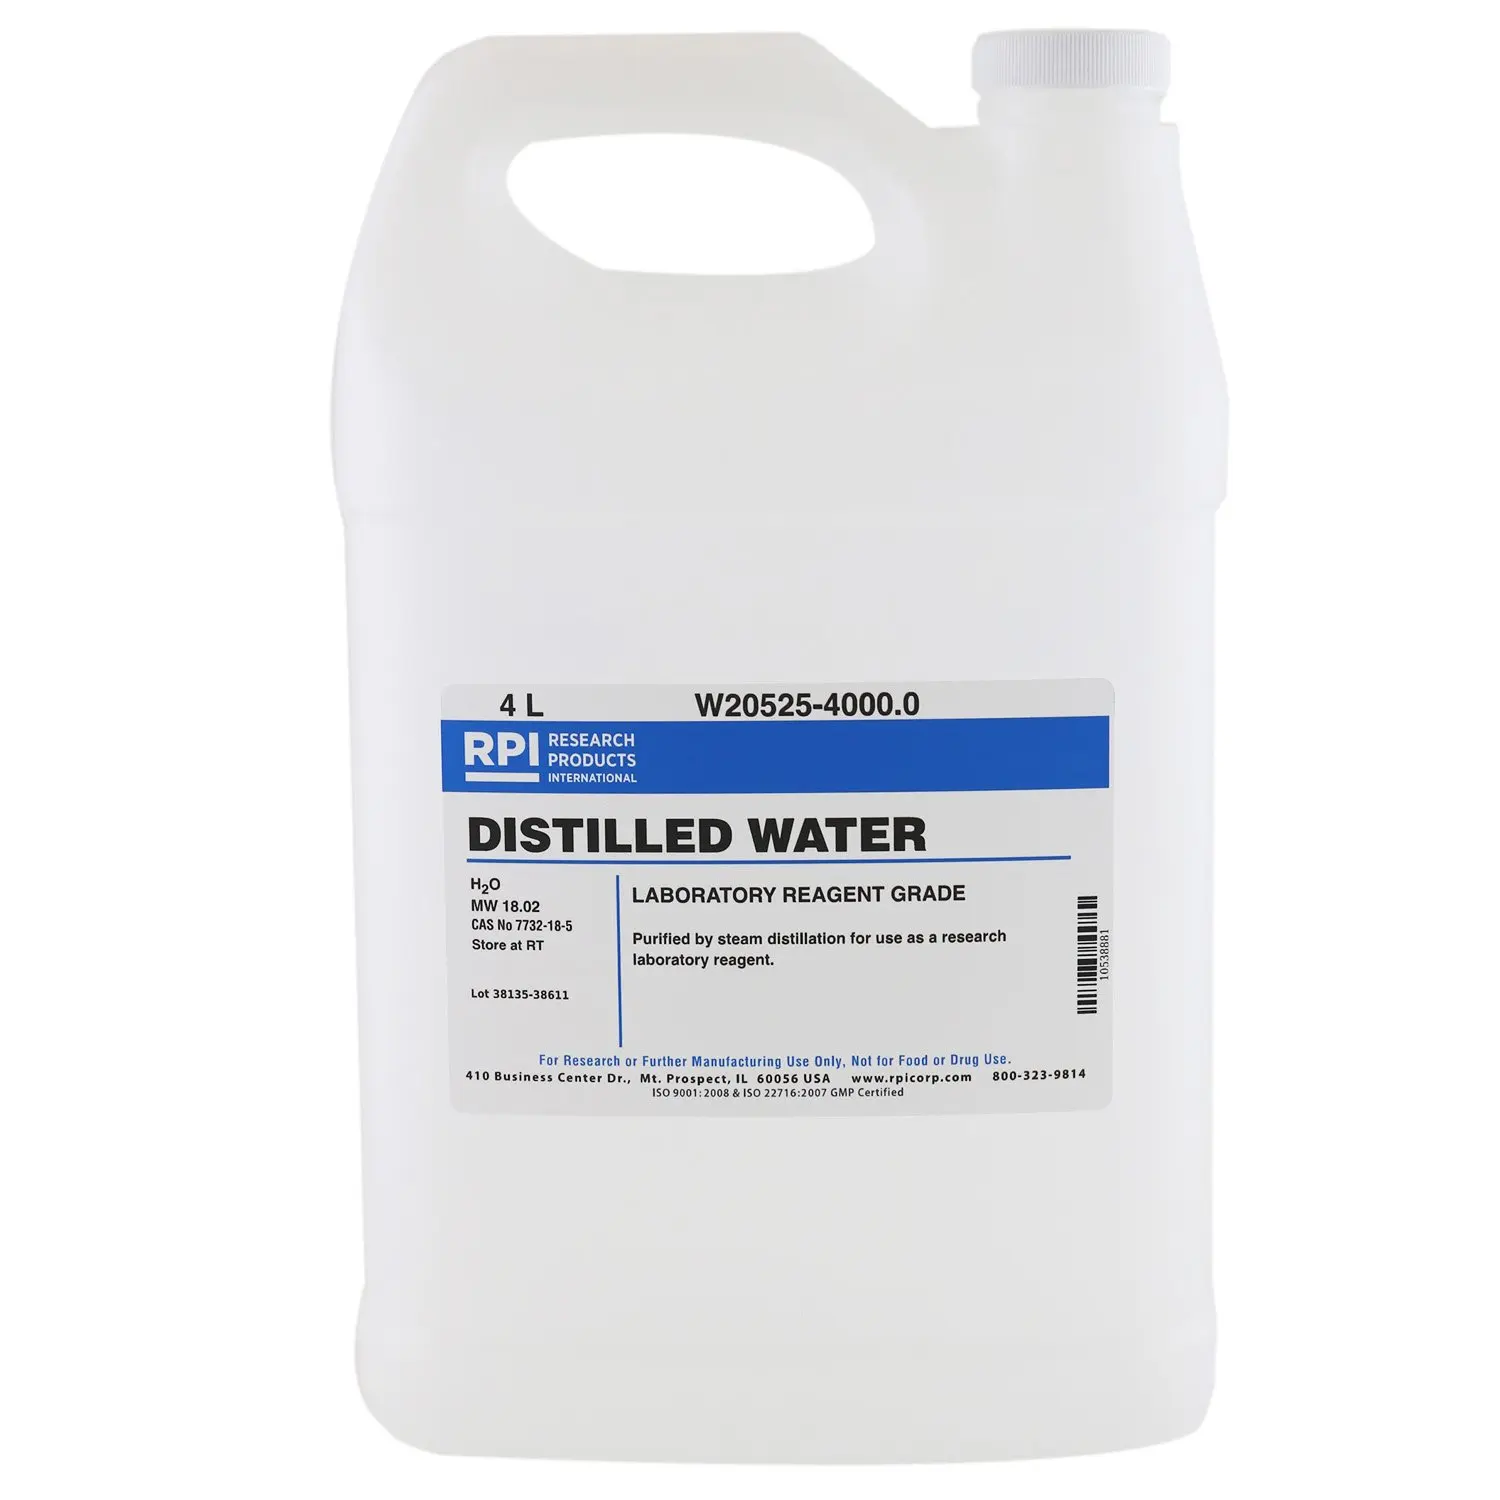 26.99. Distilled Water, Laboratory Reagent Grade, 4 Liters. 